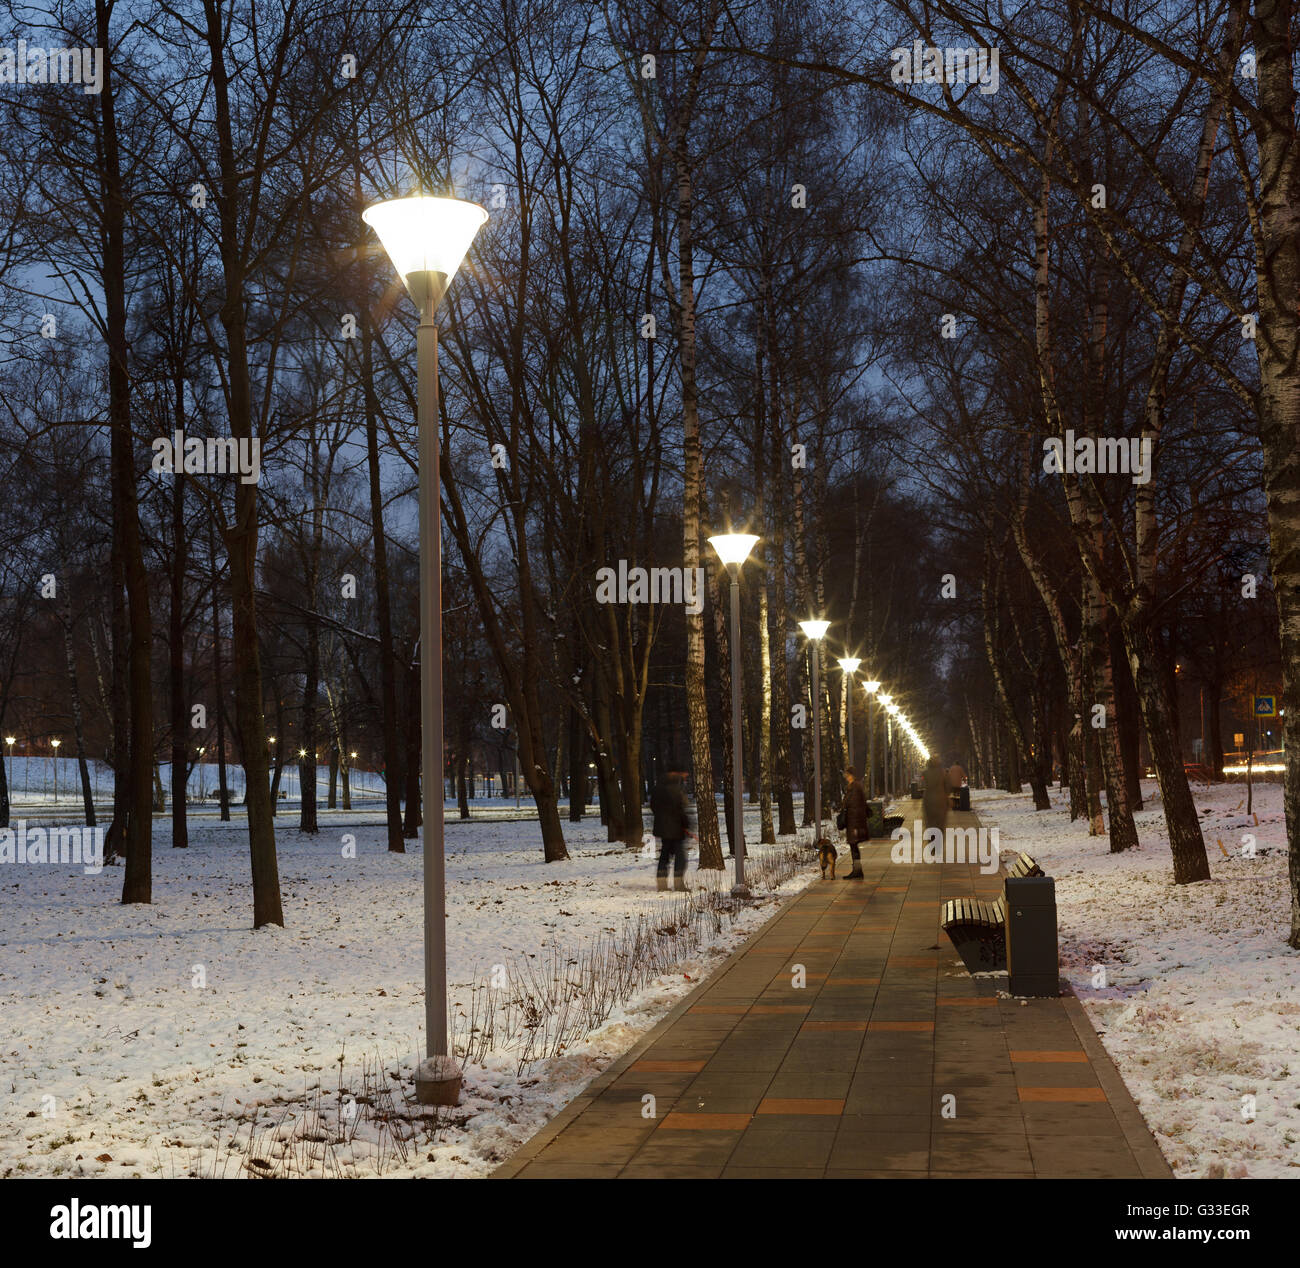 Abend-Beleuchtung im Park. Straßenlaternen. Russland, Moscow. Stockfoto